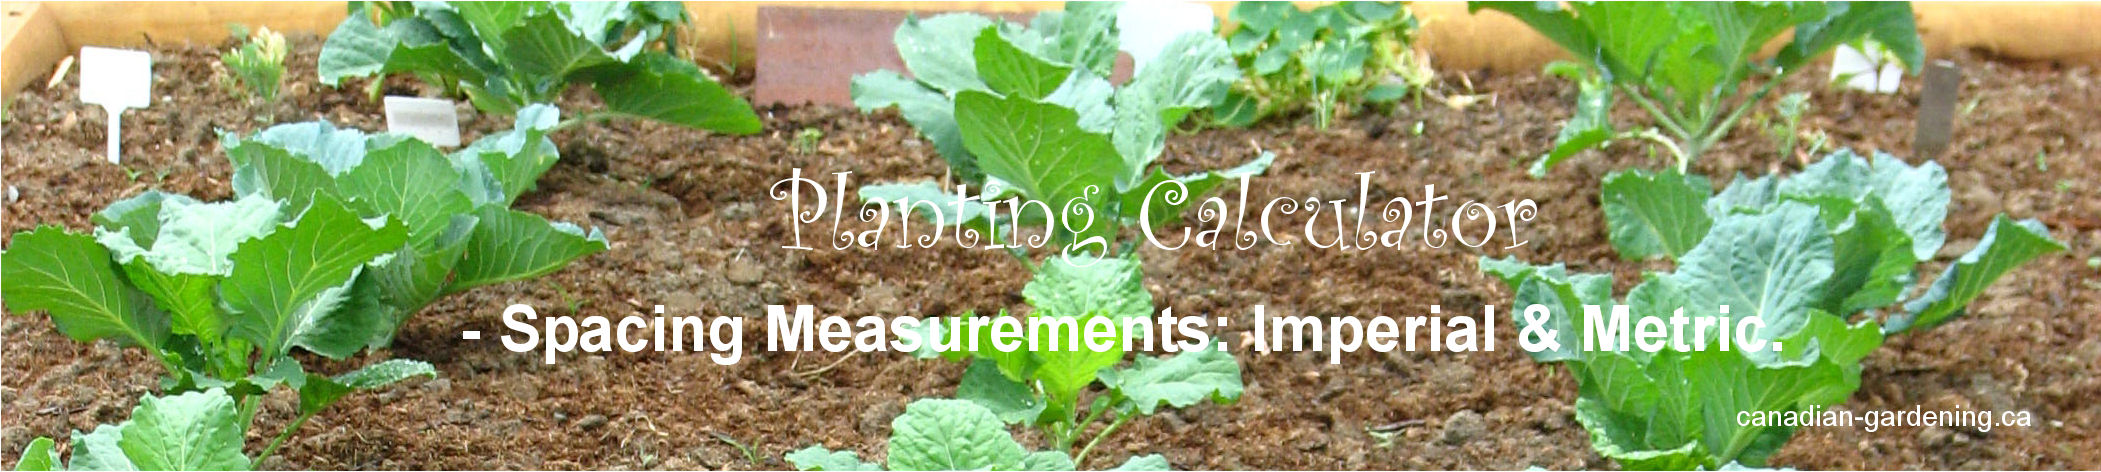 Canadian Gardening - planting, vegetable, calculator, imperial, metric, spacing